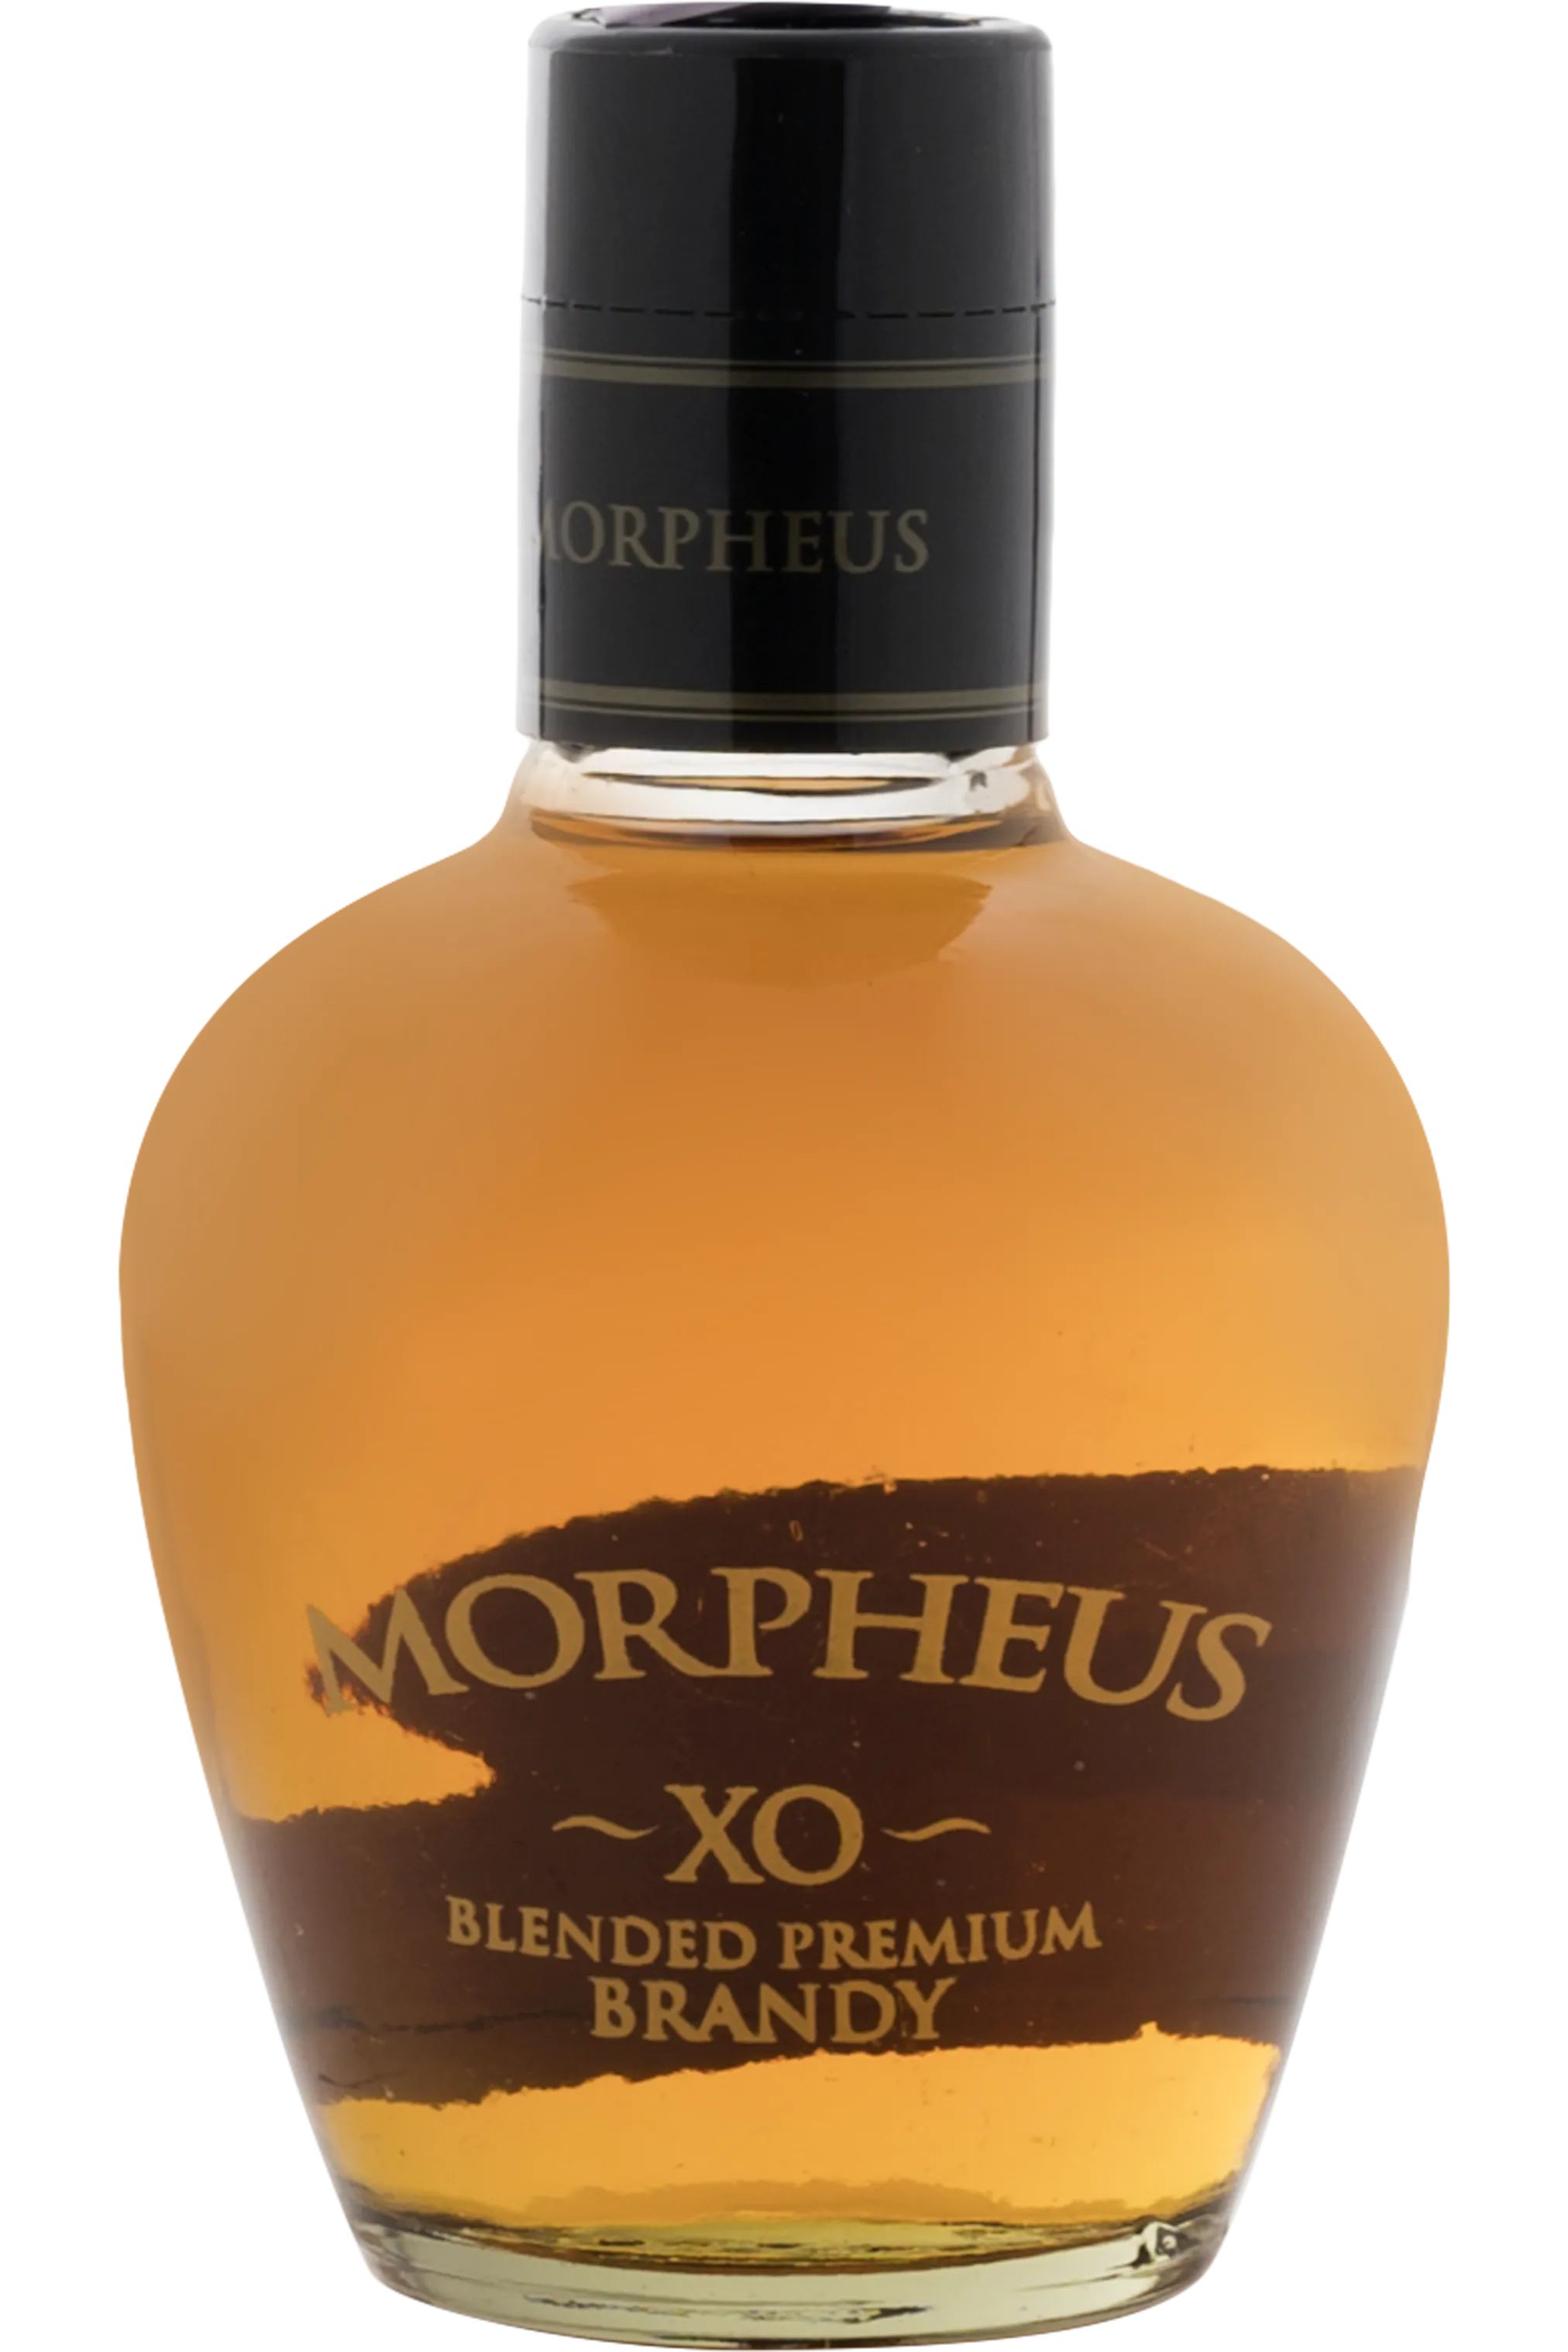 Morpheus Blue XO Premium Brandy - Grand Gold Quality Award 2023 from Monde  Selection